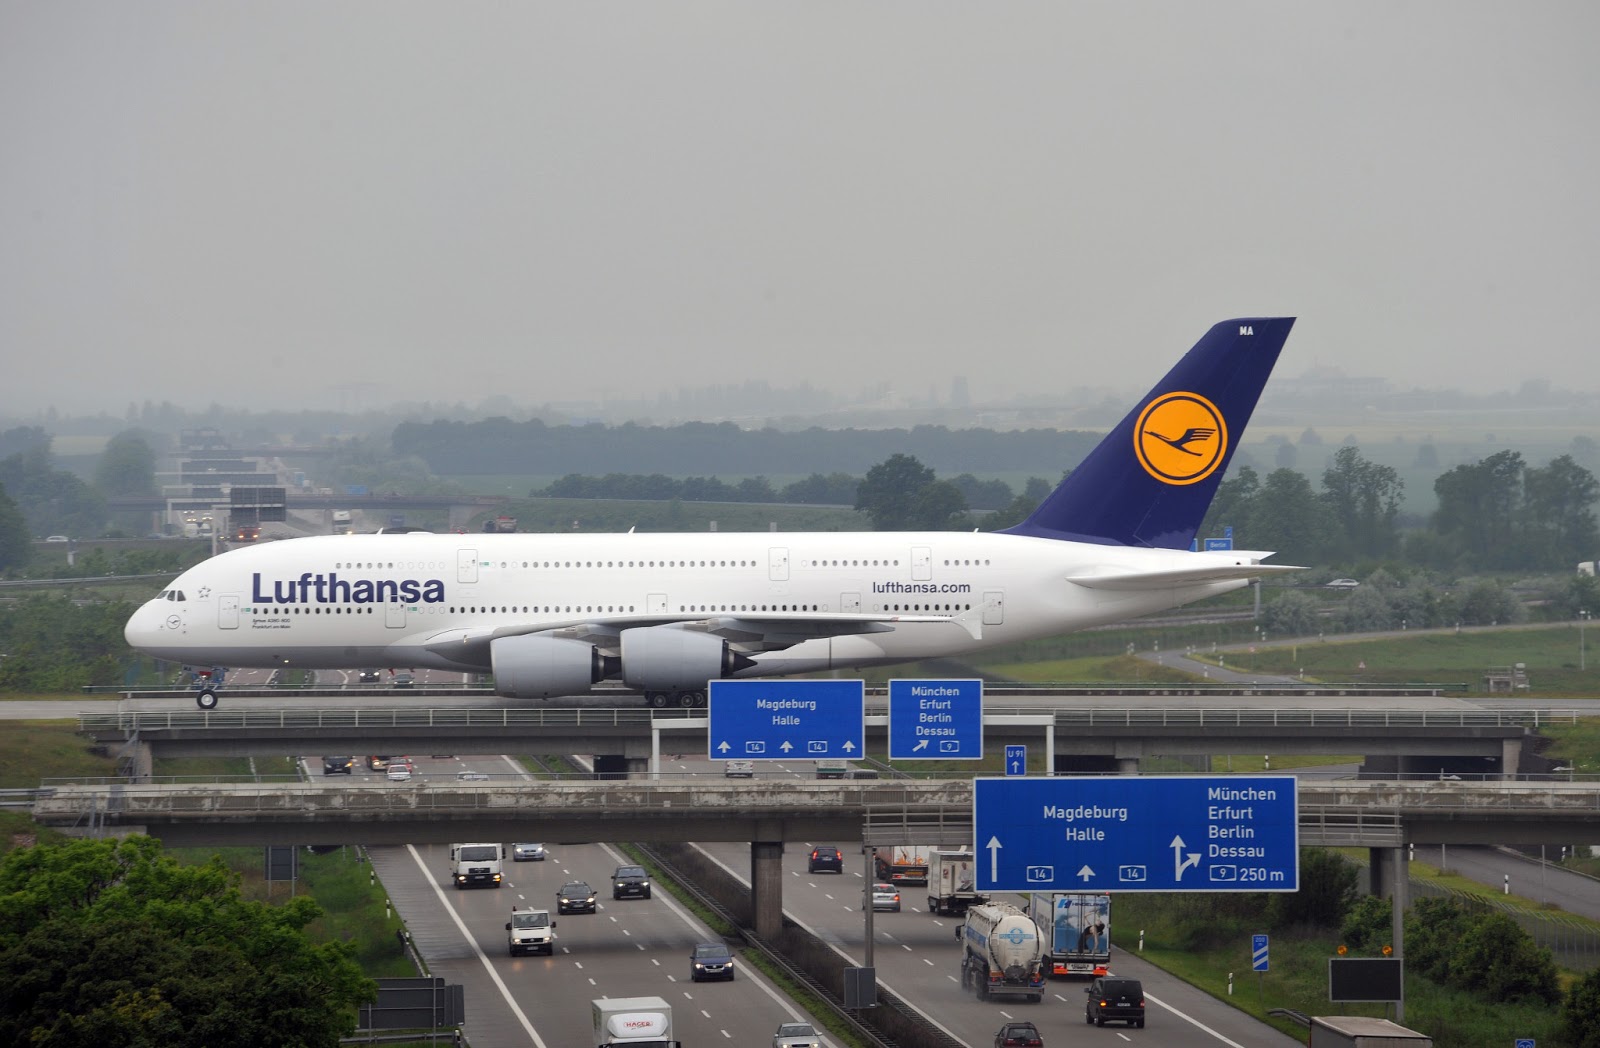 Airbus A380 #5